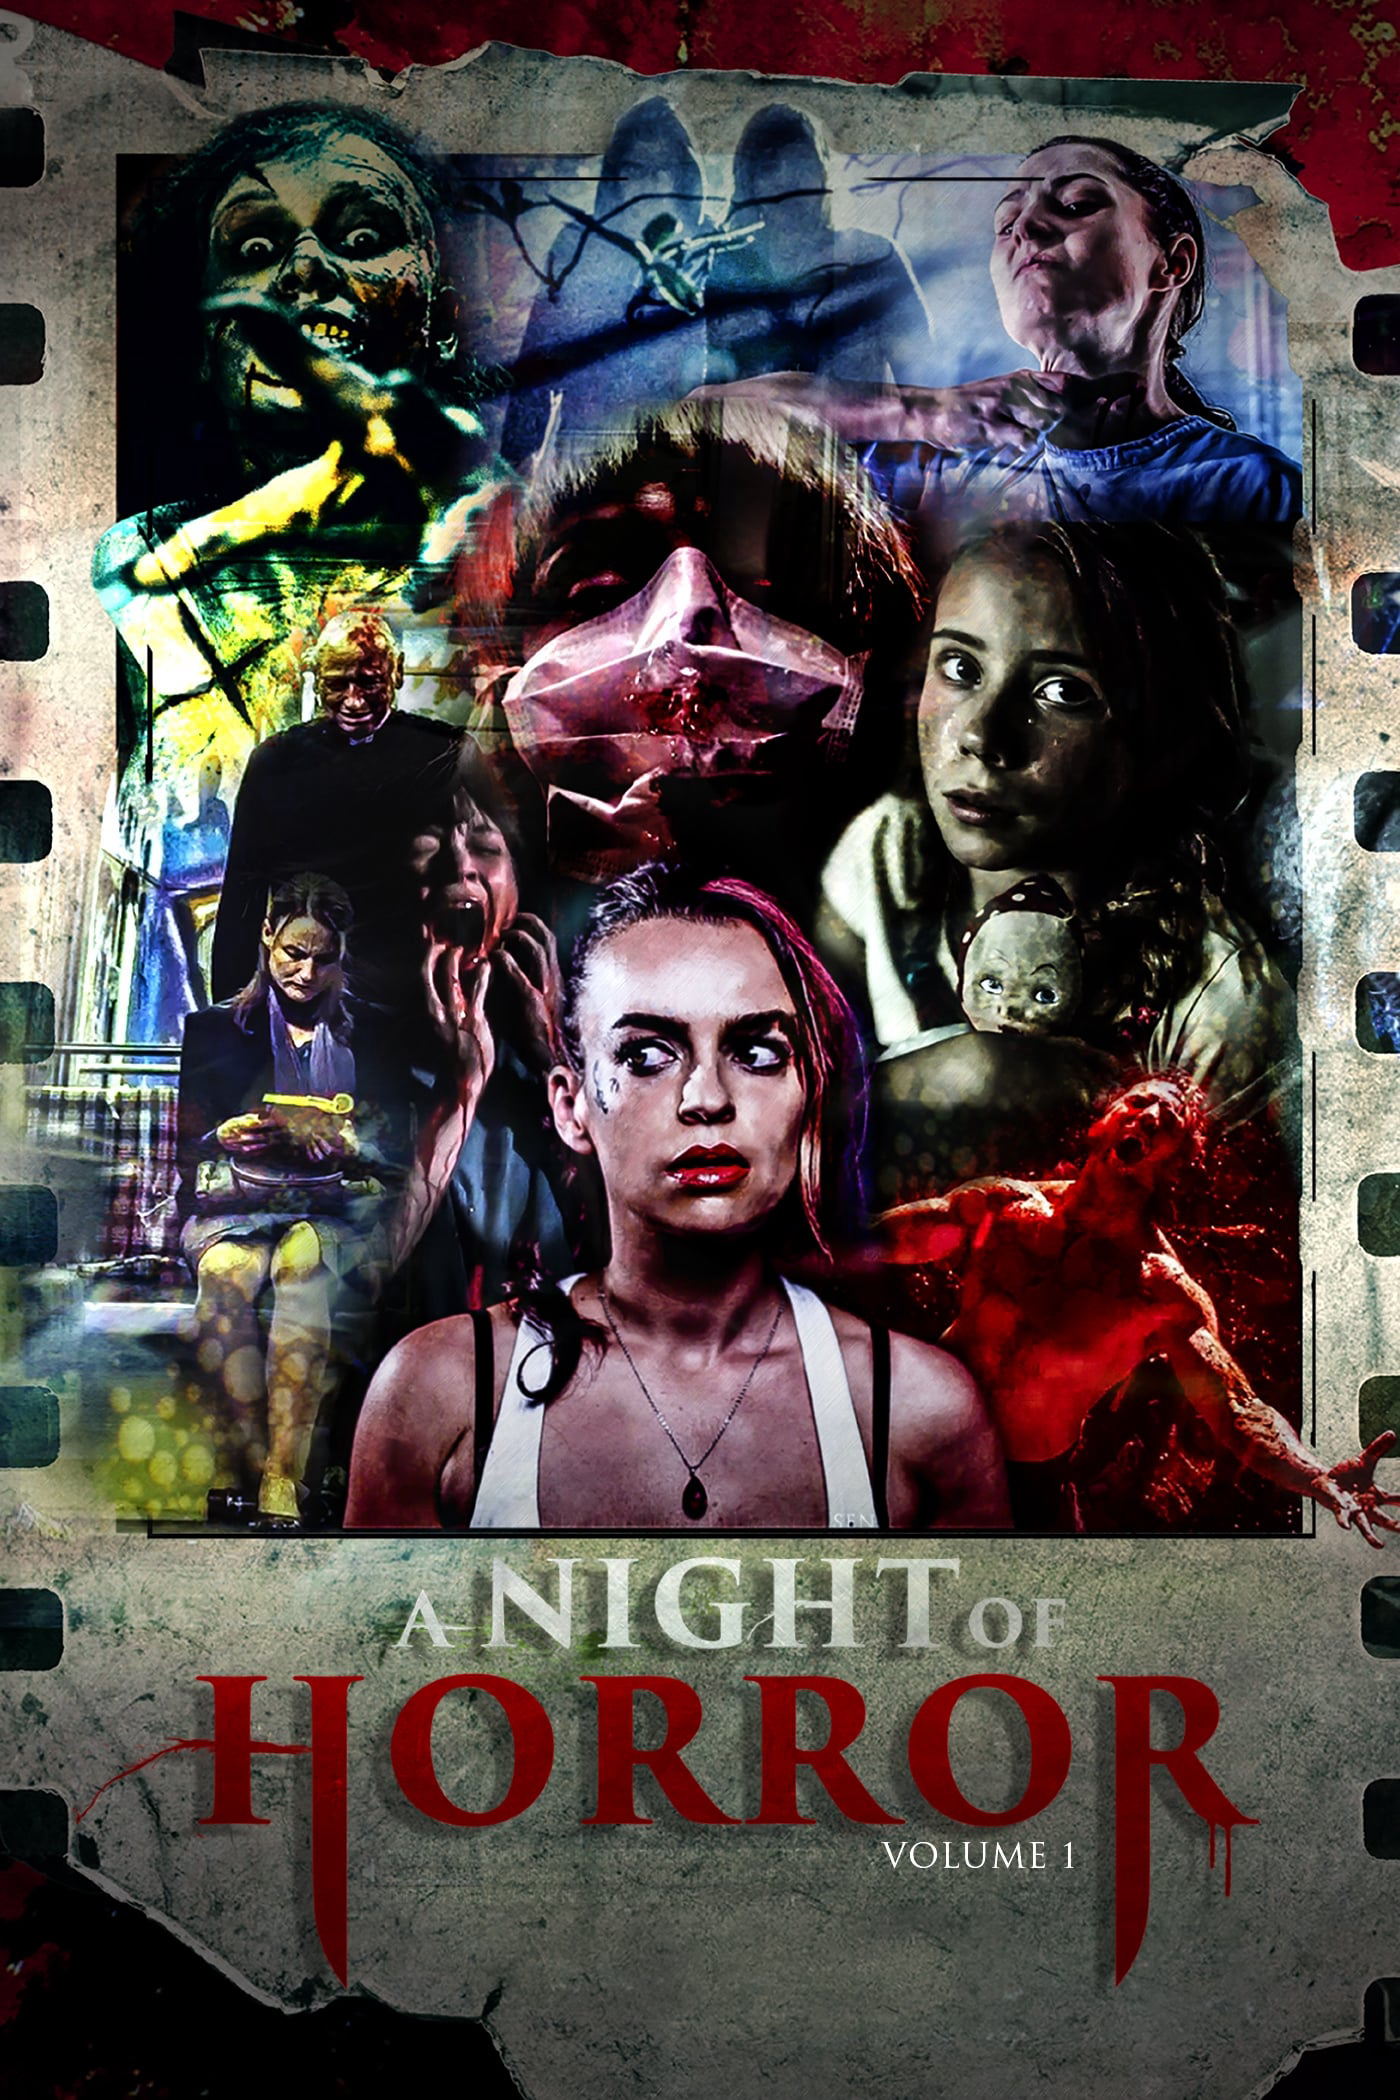 Xem Phim A Night of Horror Volume 1 (A Night of Horror Volume 1)